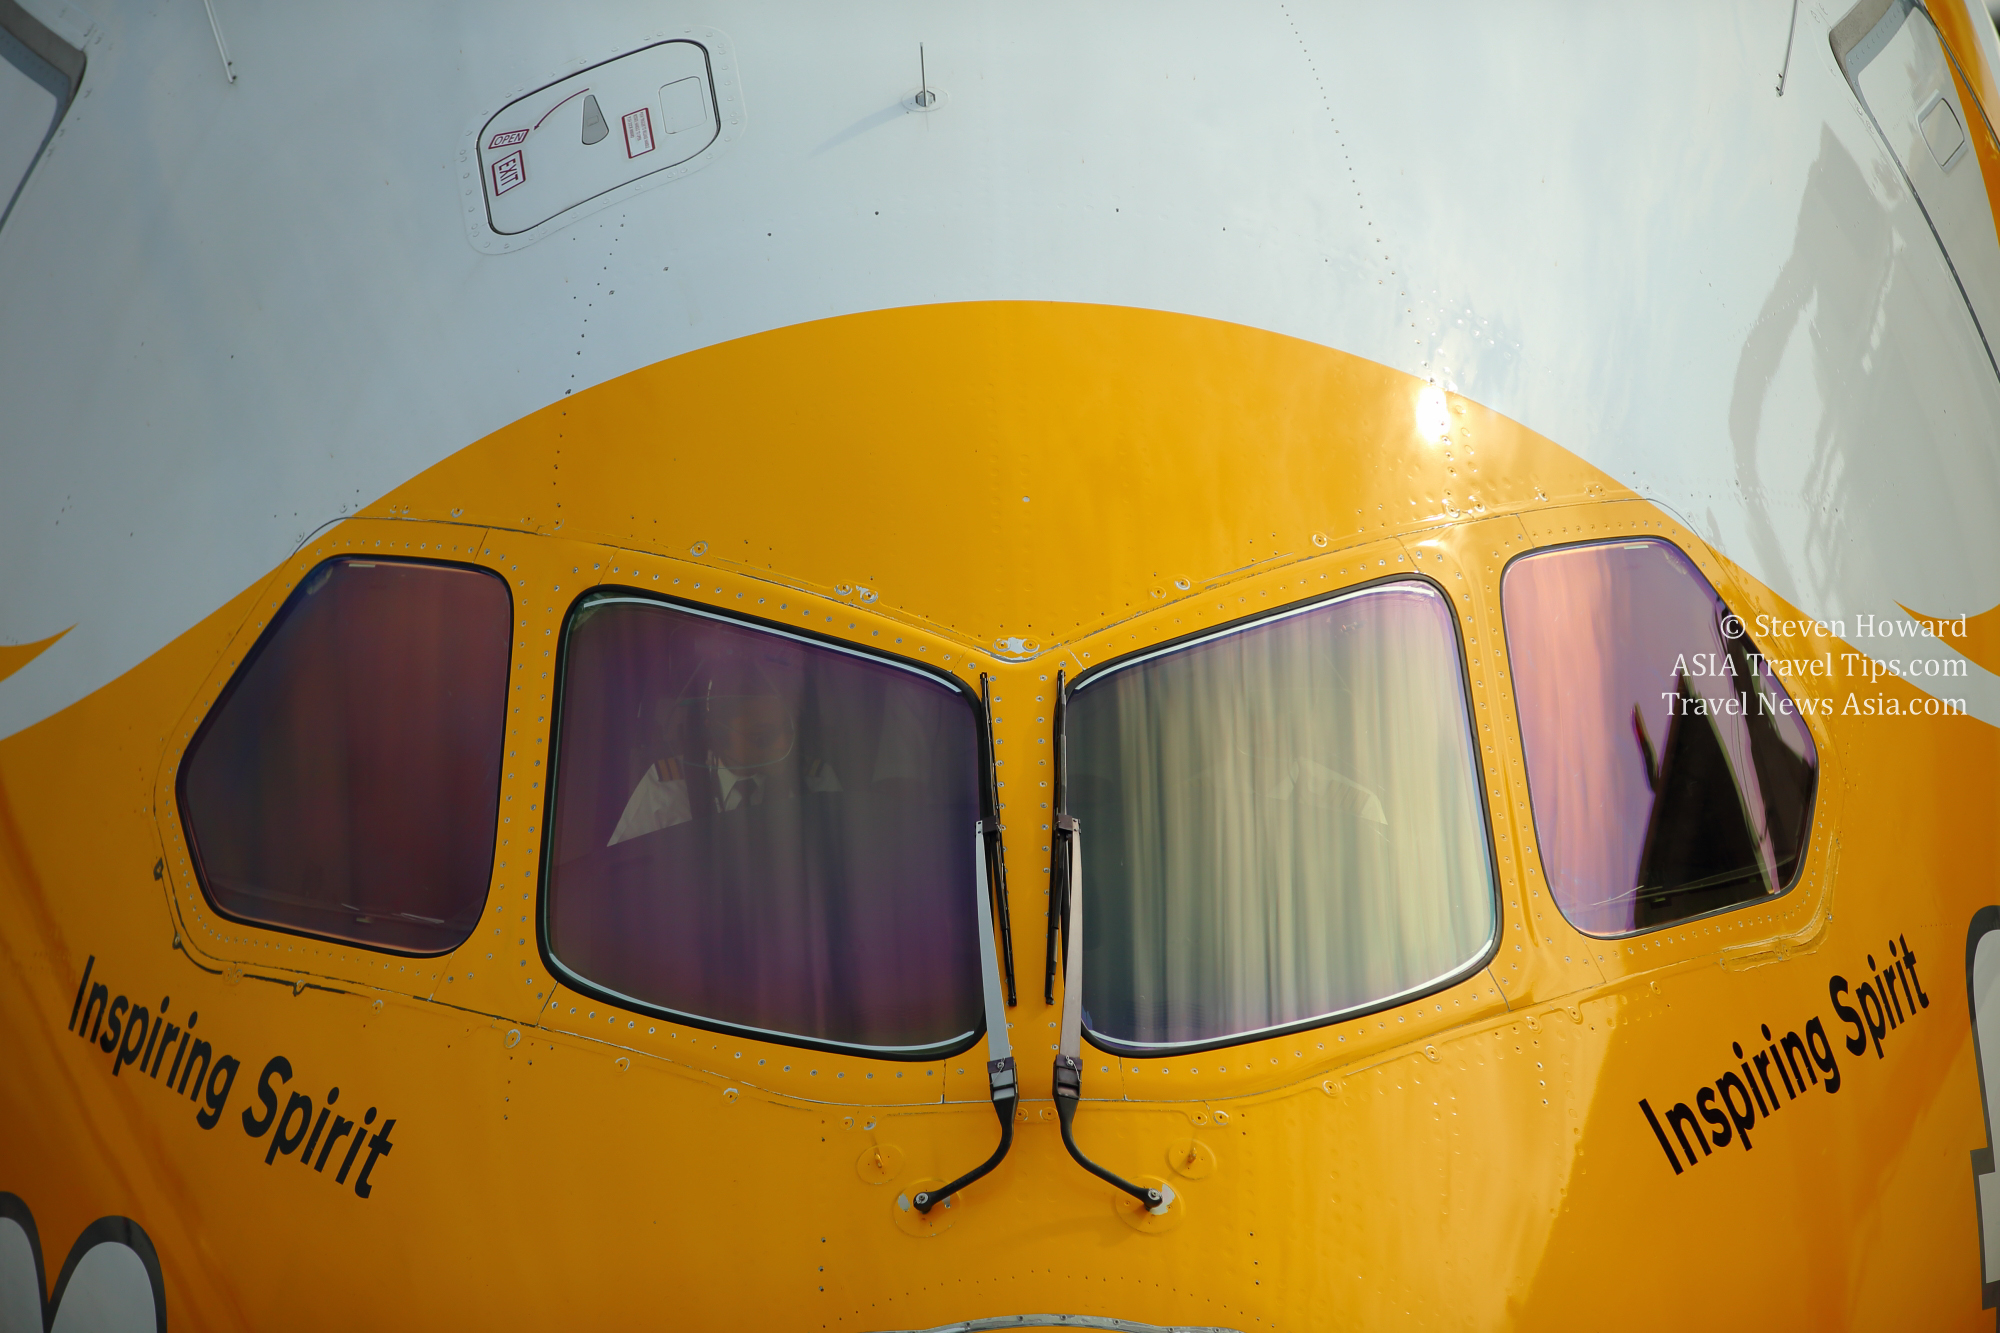 Nose of the 'Inspiring Spirit' Scoot Boeing 787-9 Dreamliner reg: 9V-OJC. Picture by Steven Howard of TravelNewsAsia.com Click to enlarge.